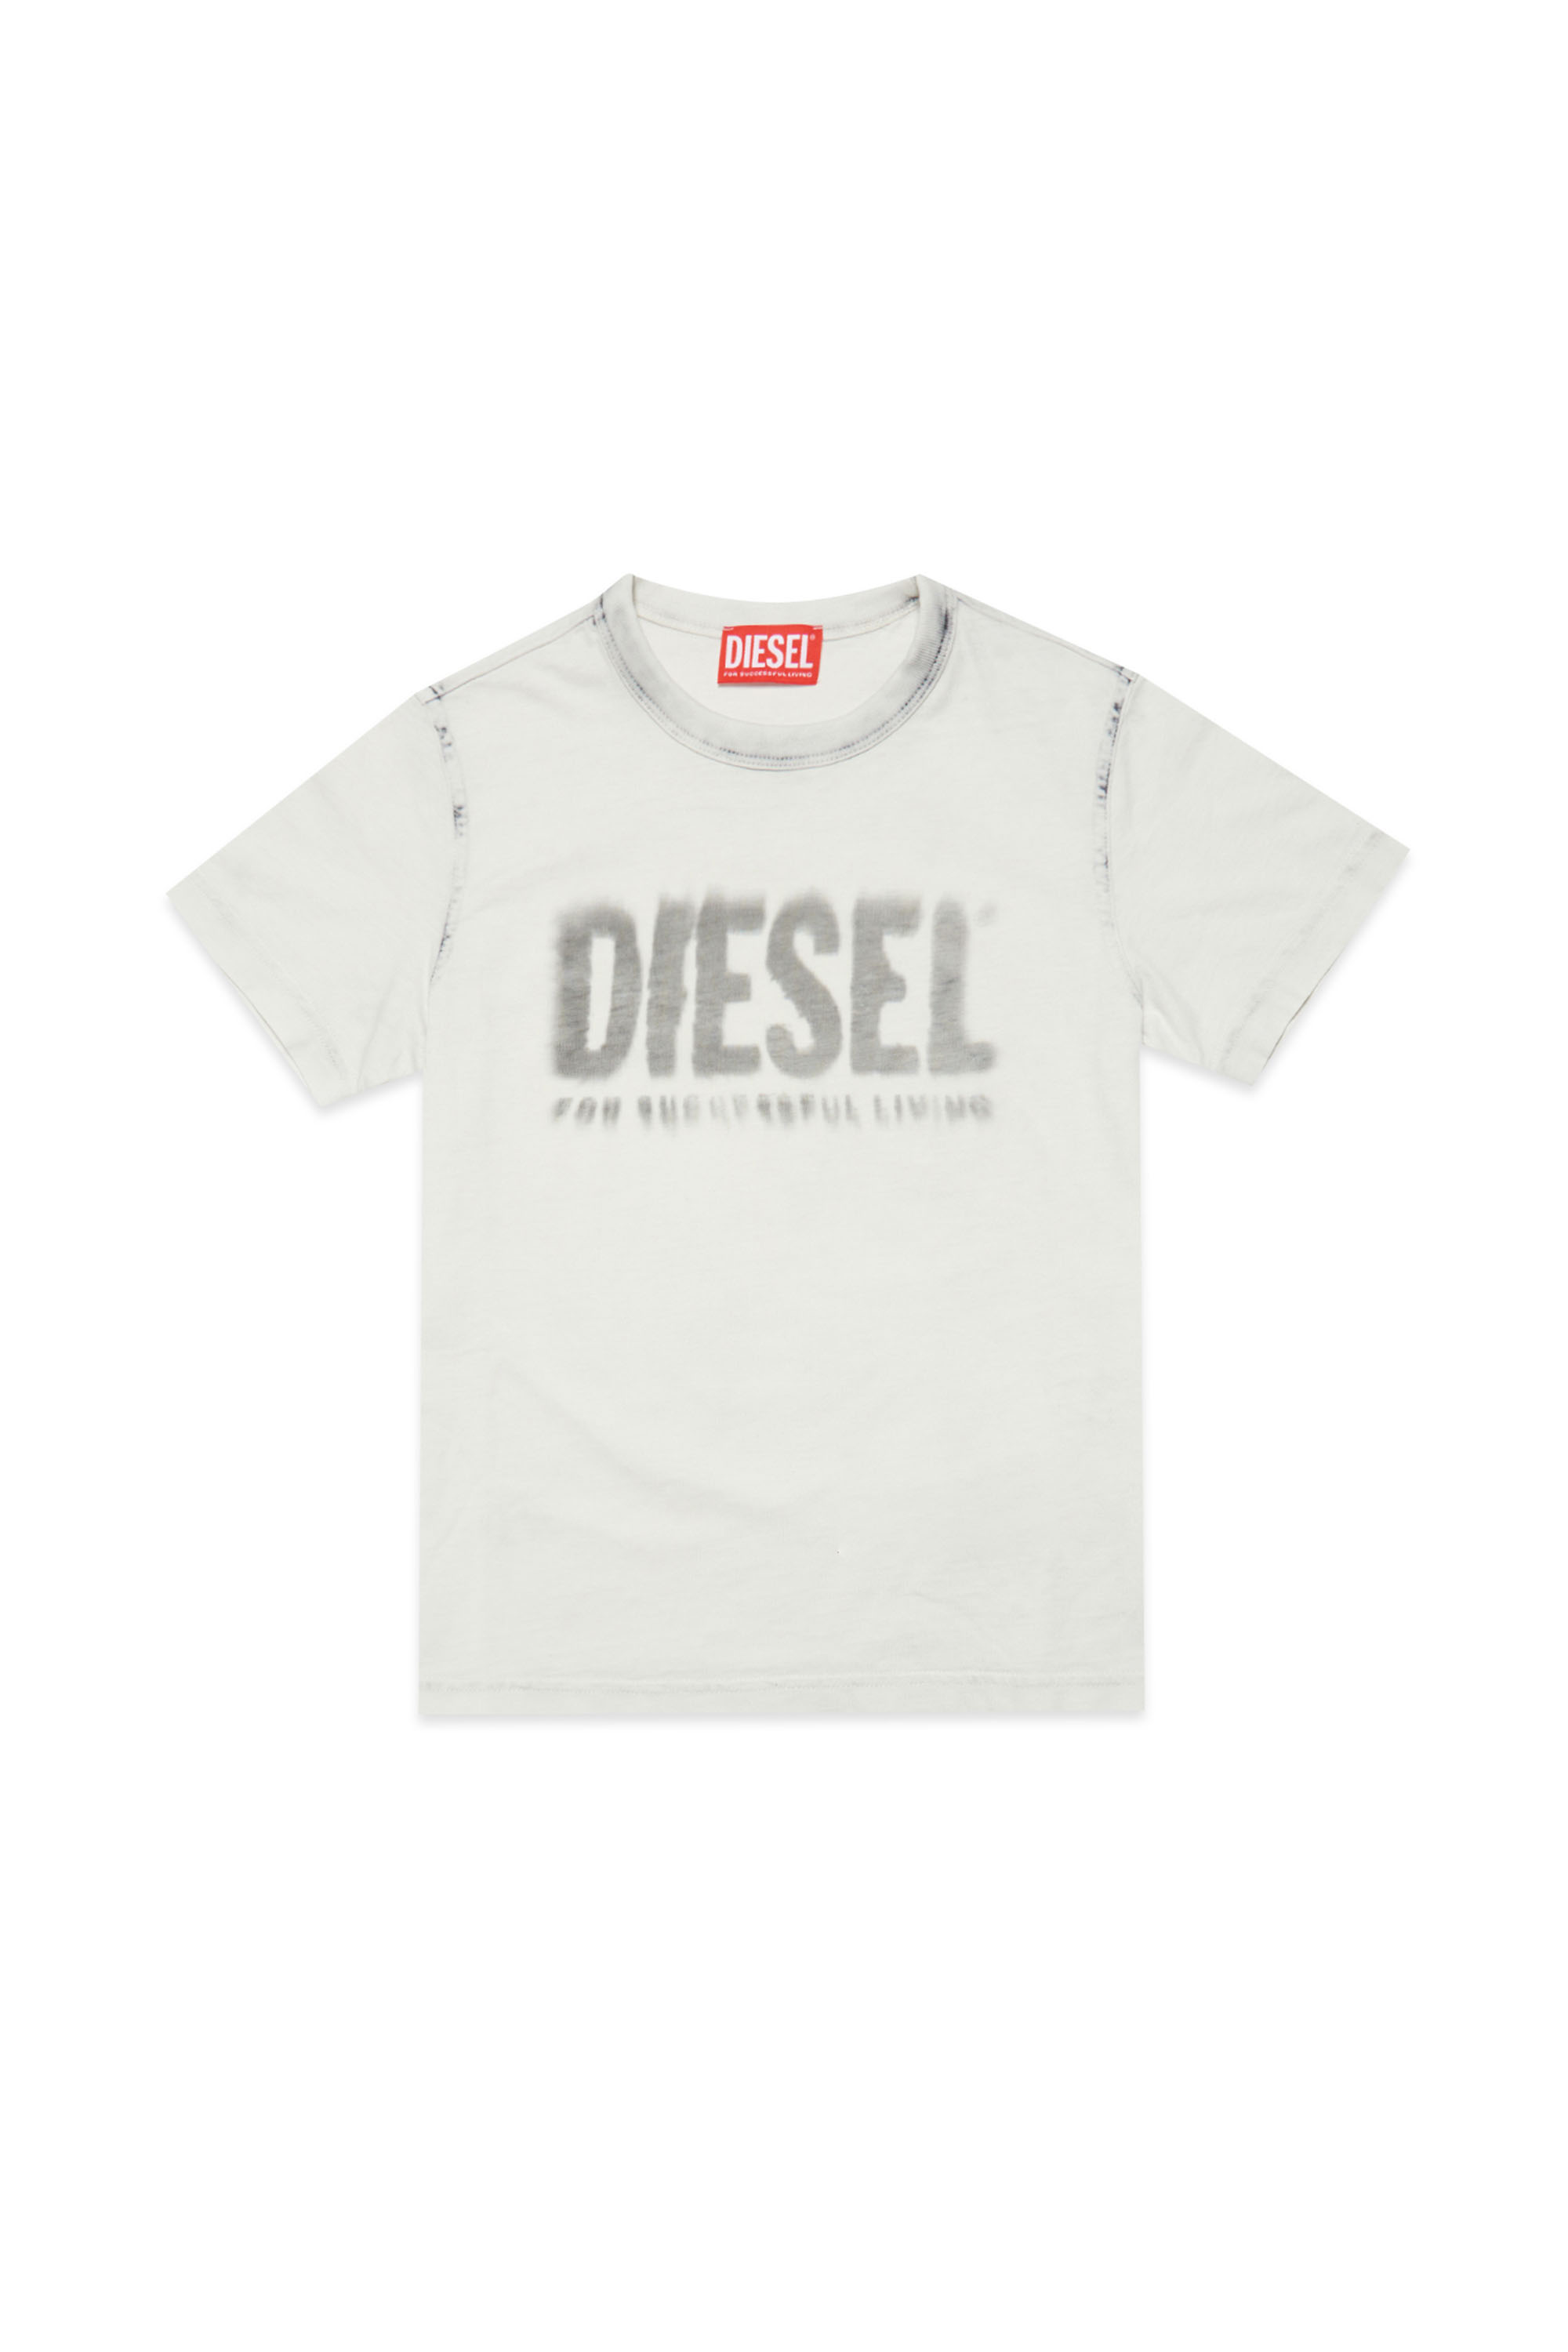 Diesel - TDIEGORE6, Bianco/Grigio - Image 1